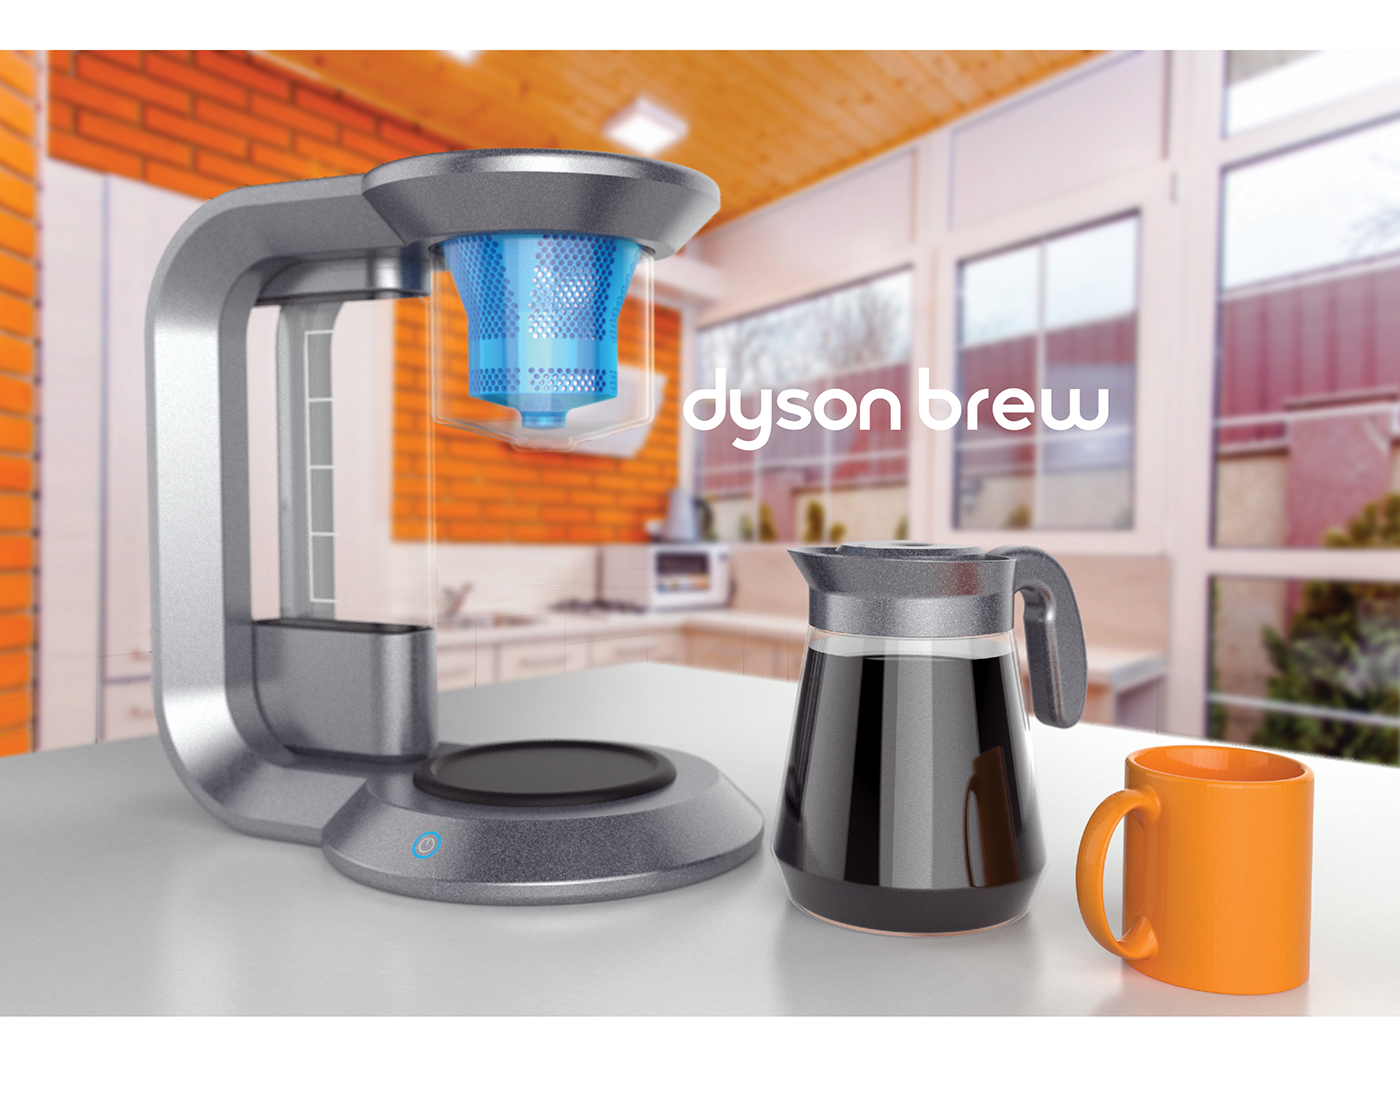 Coffee Dyson vacuum keyshot Solidworks product coffeemaker blue brand industrial